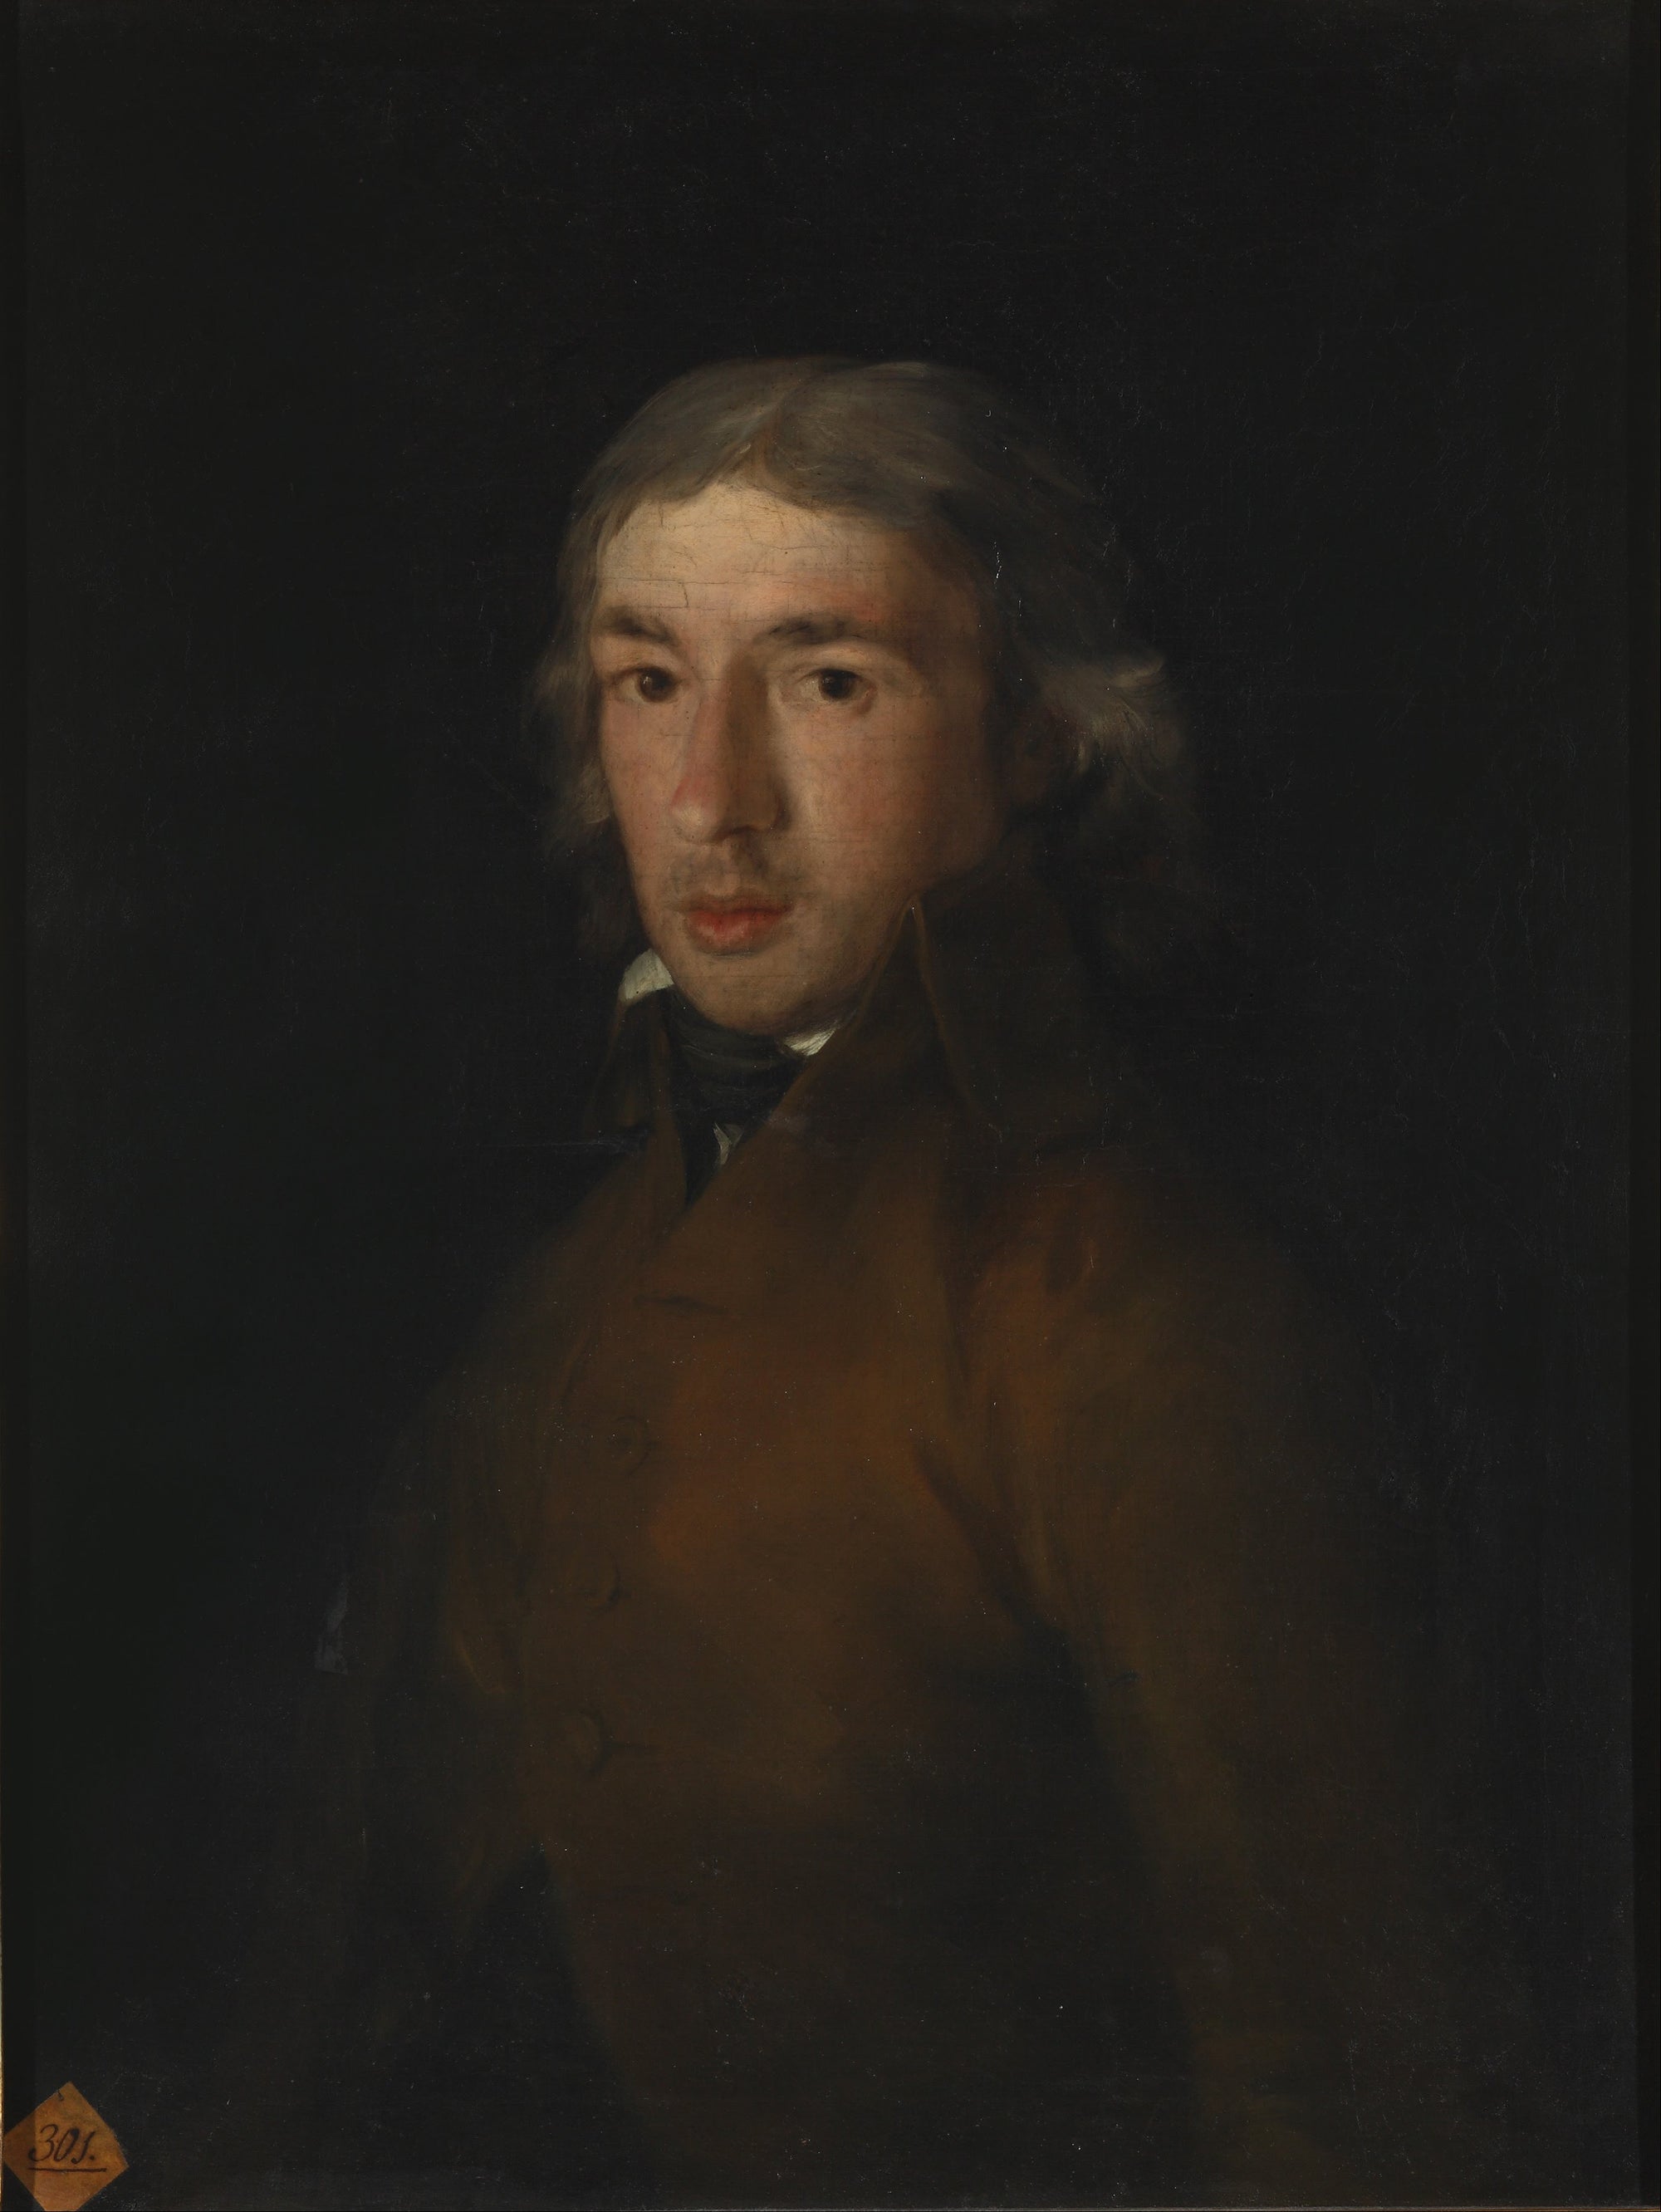 Portrait de Leandro Fernandez de Moratin - Francisco de Goya